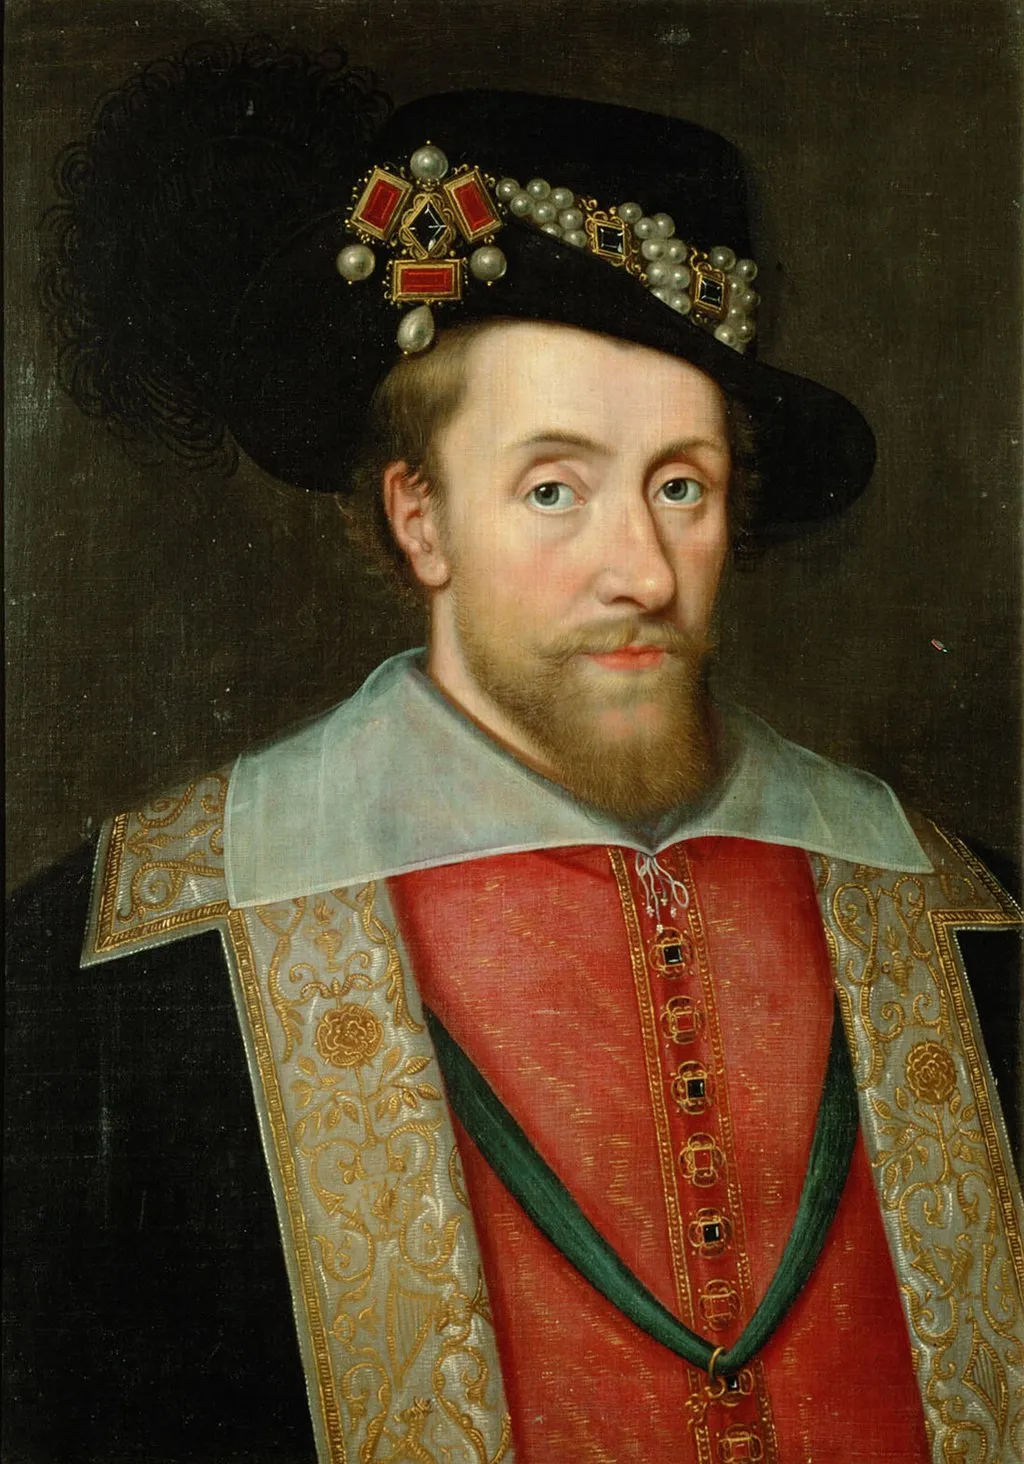 A circa 1605 portrait of James